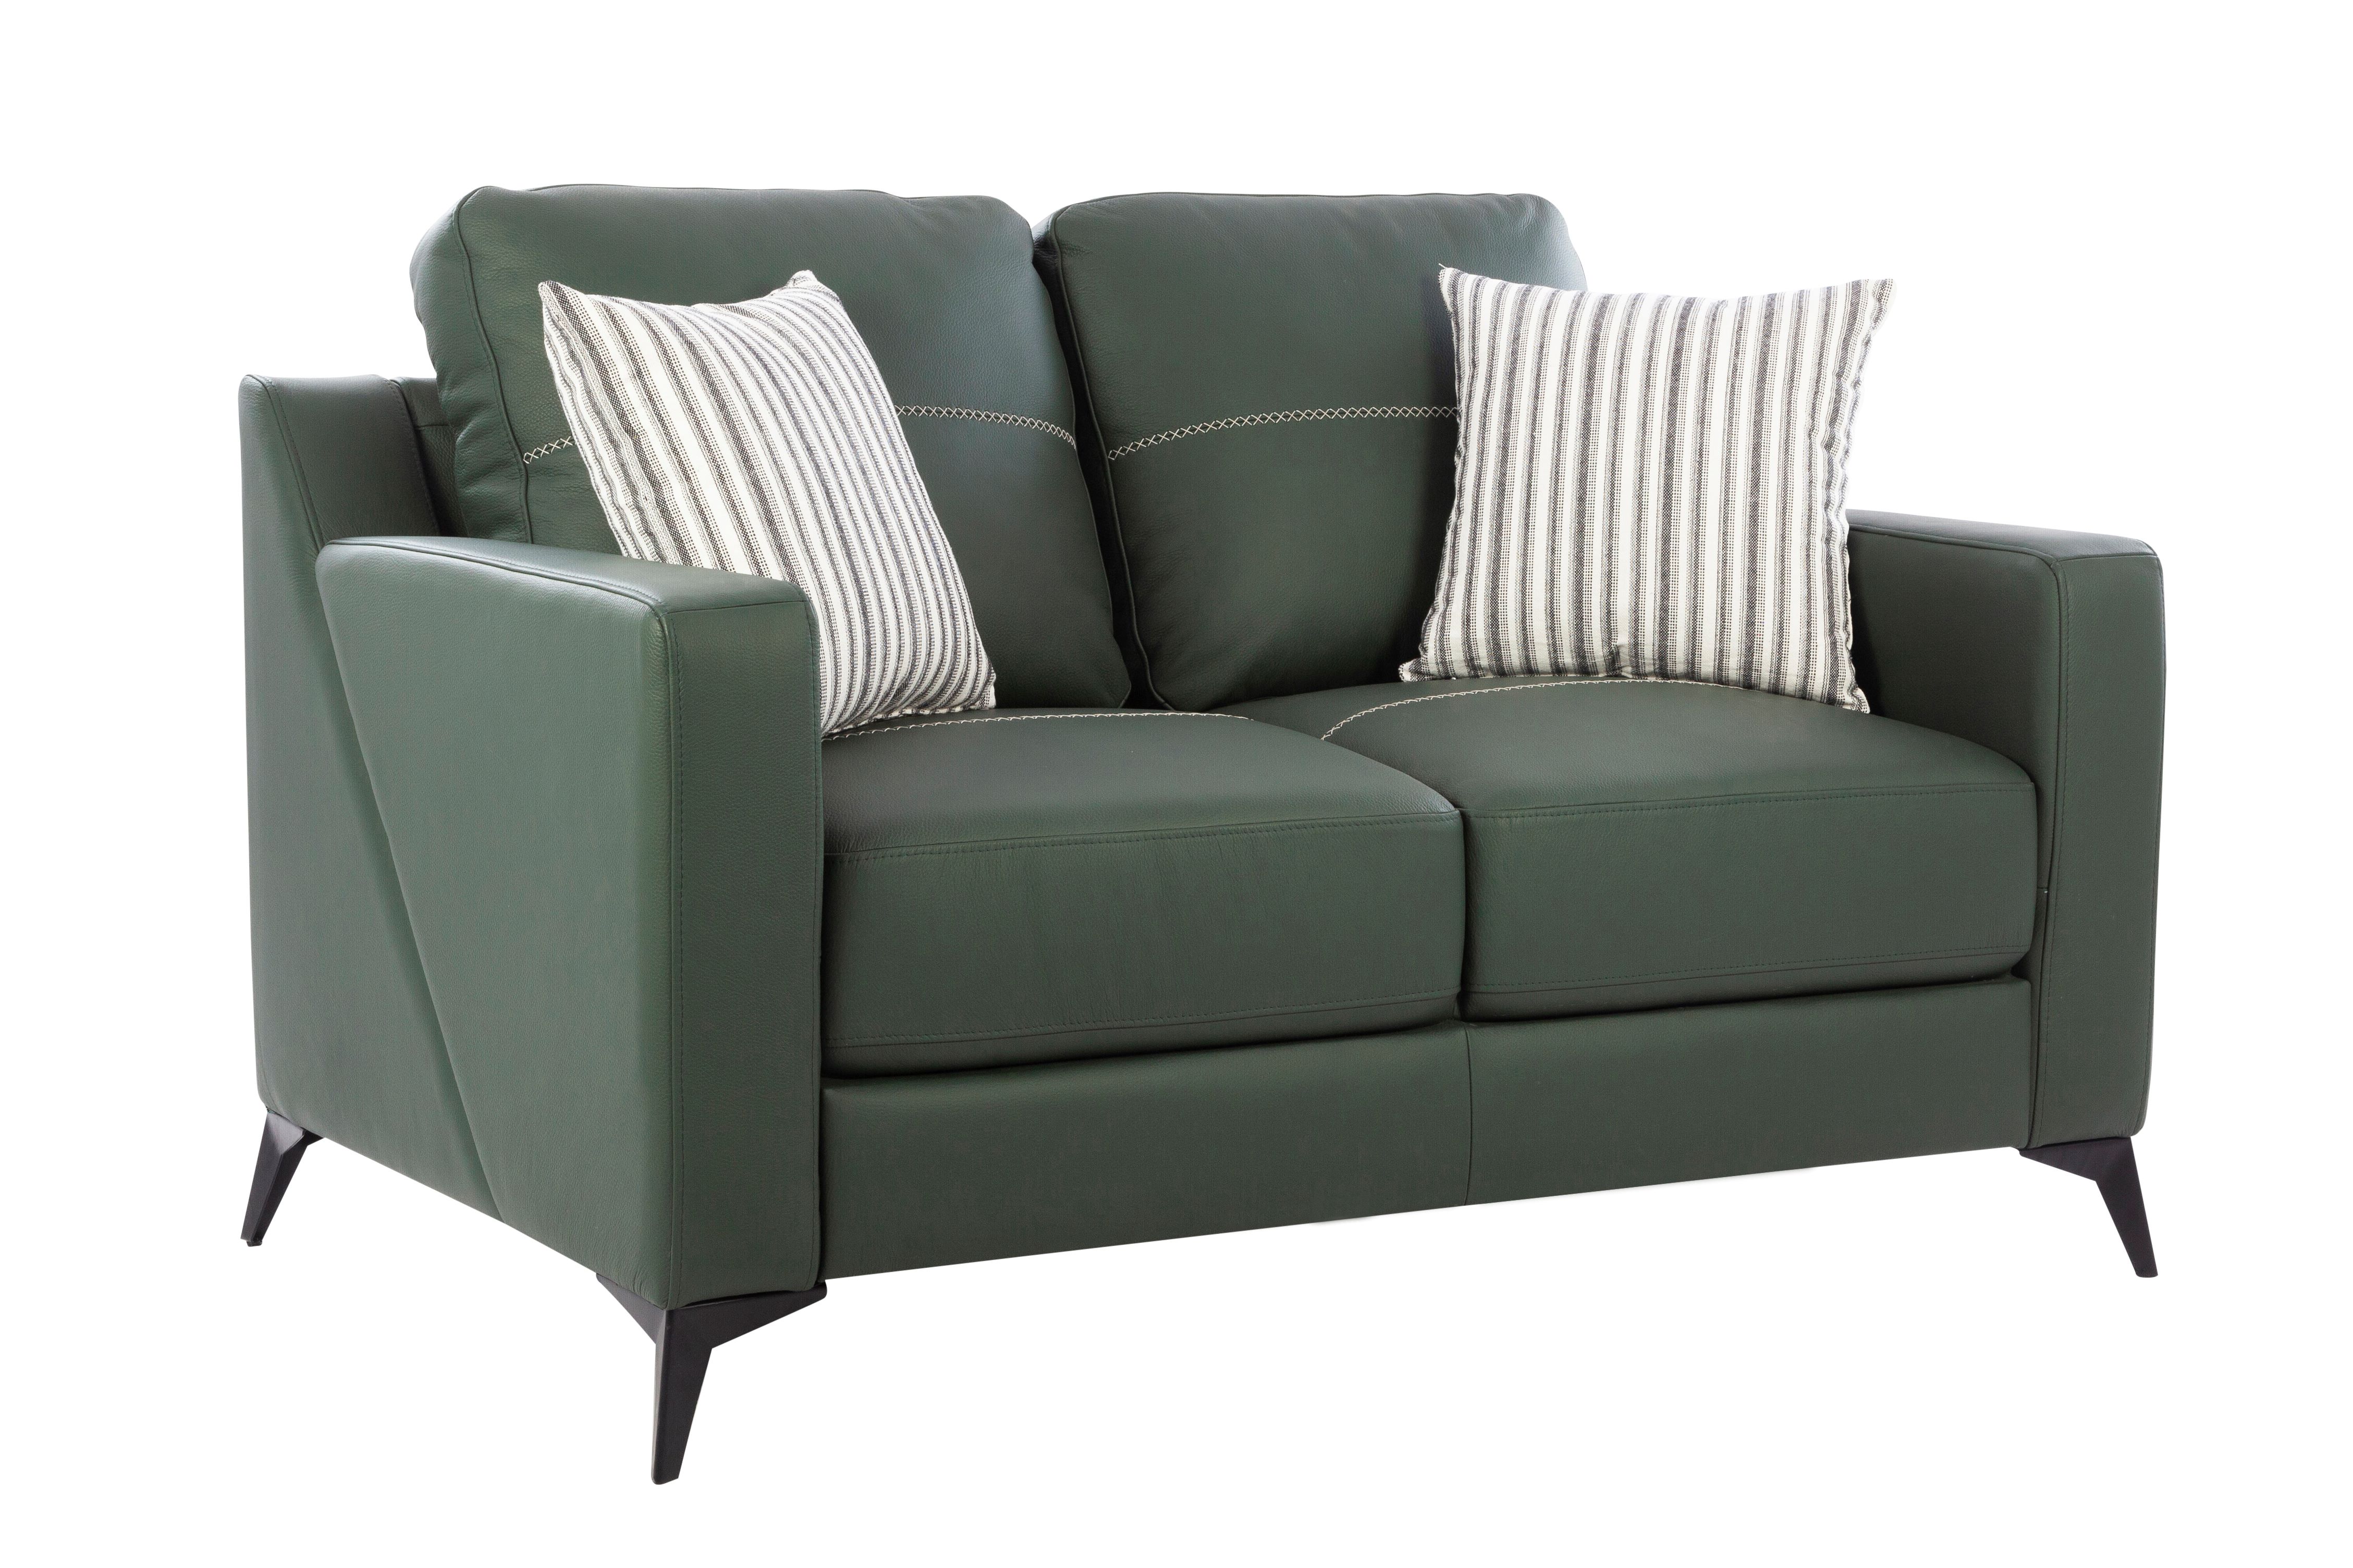 Tucson Leather sofa set